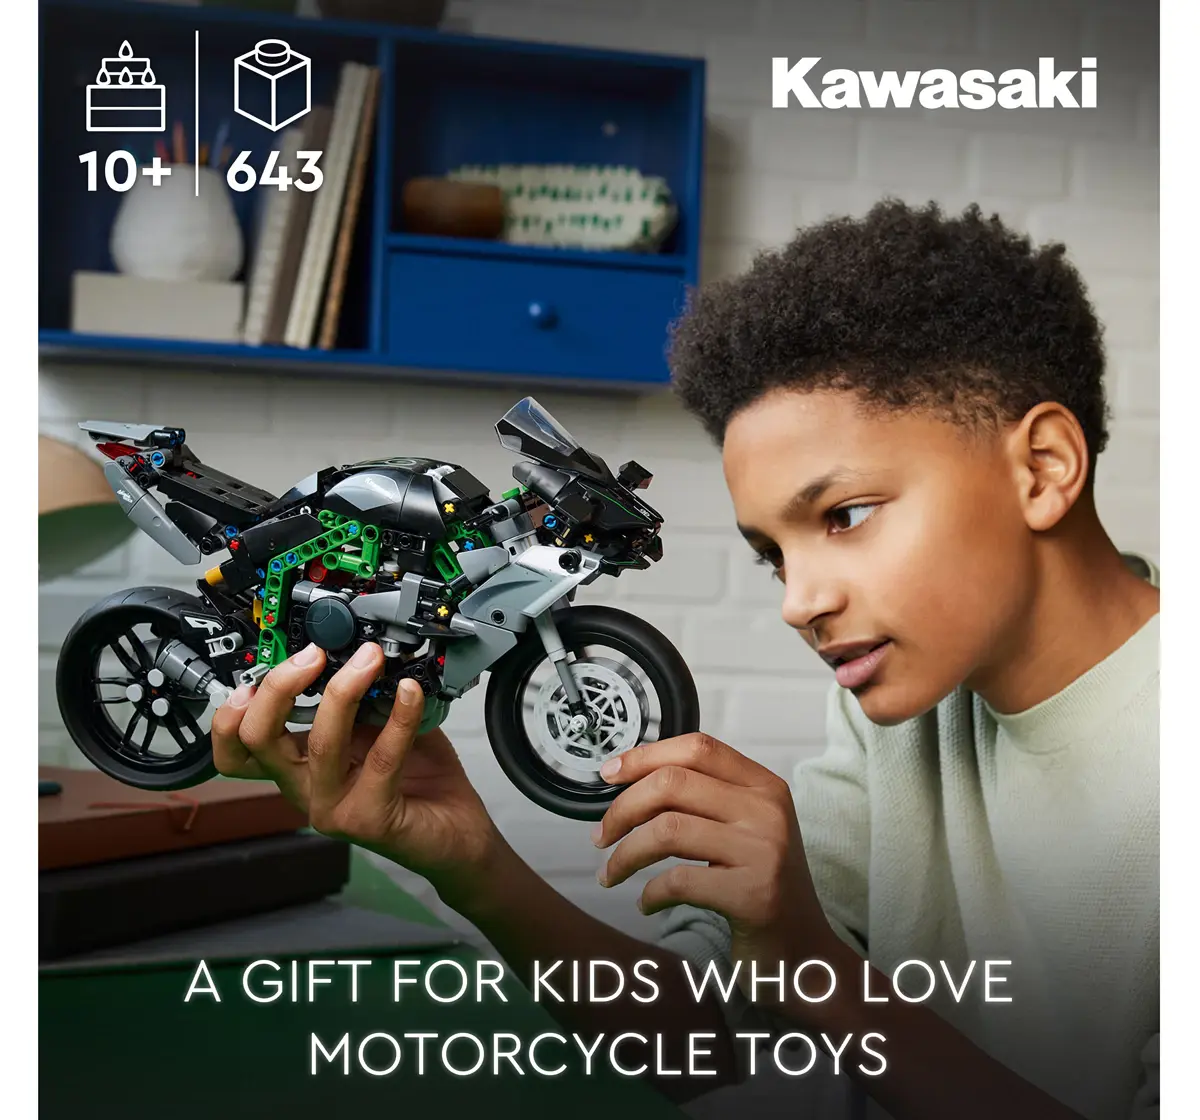 LEGO Technic Kawasaki Ninja H2R Motorcycle Set 42170 (1212 Pieces)